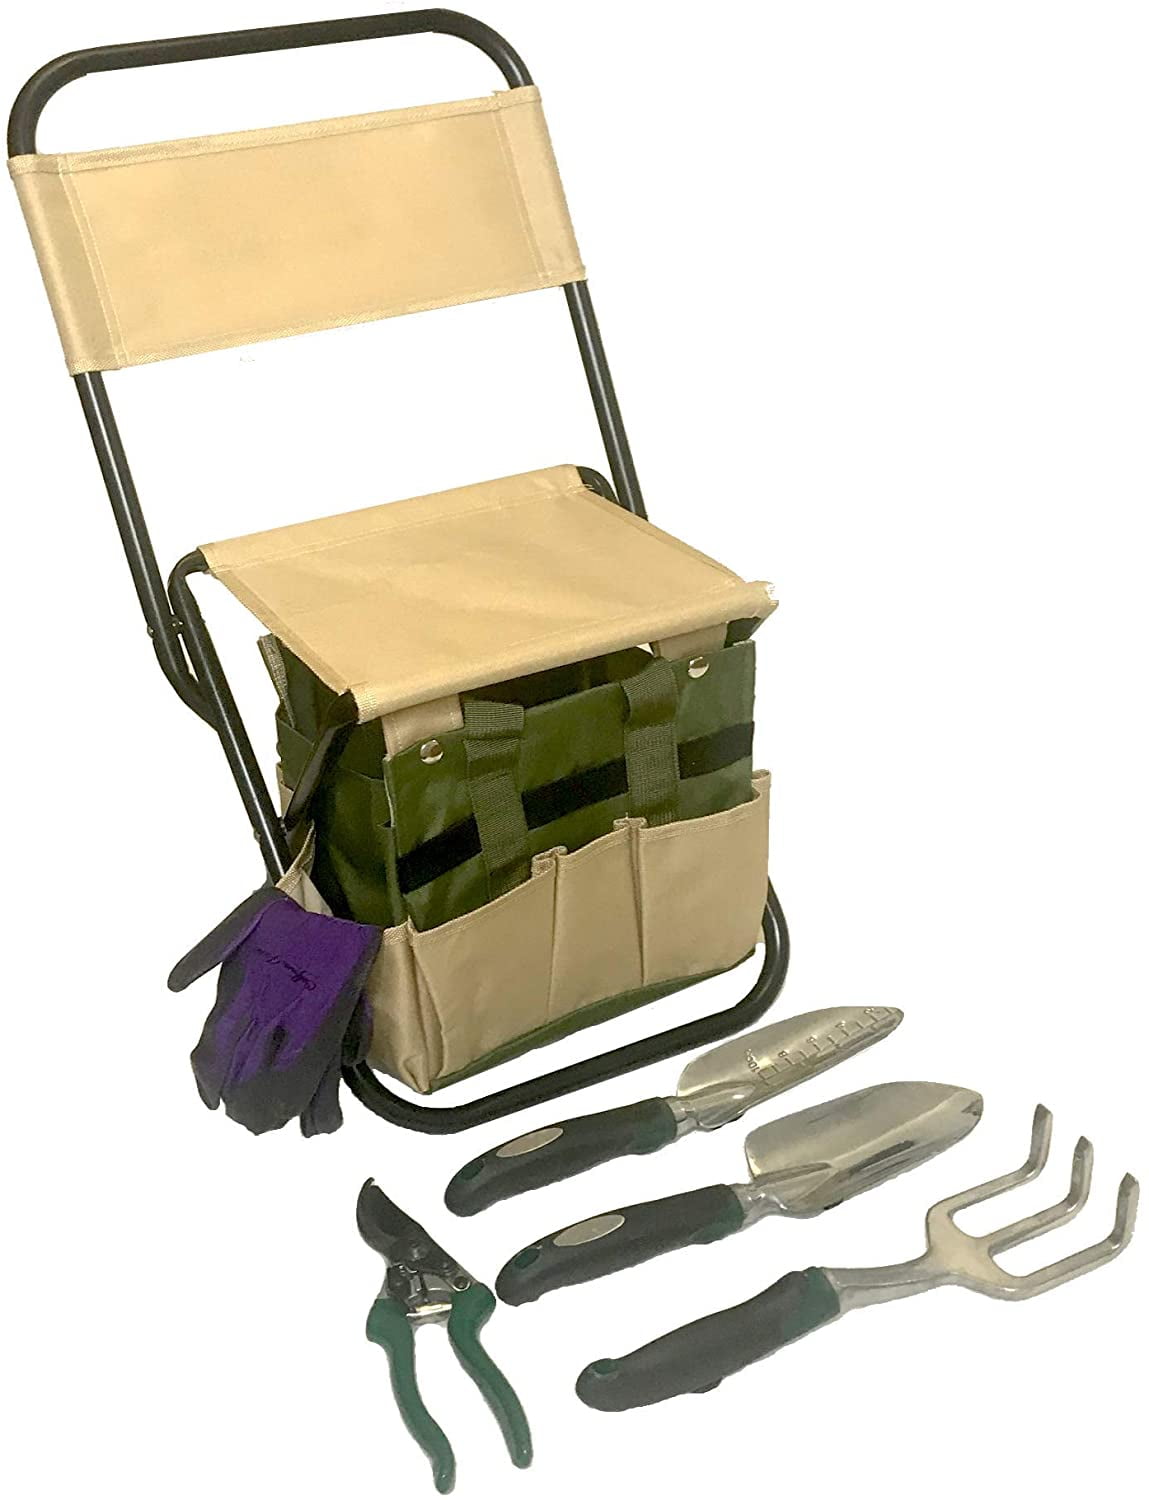 Hand Gardening Chrome Steel Tools Set Folding Stool Seat Bag 10 Piece For Garden 